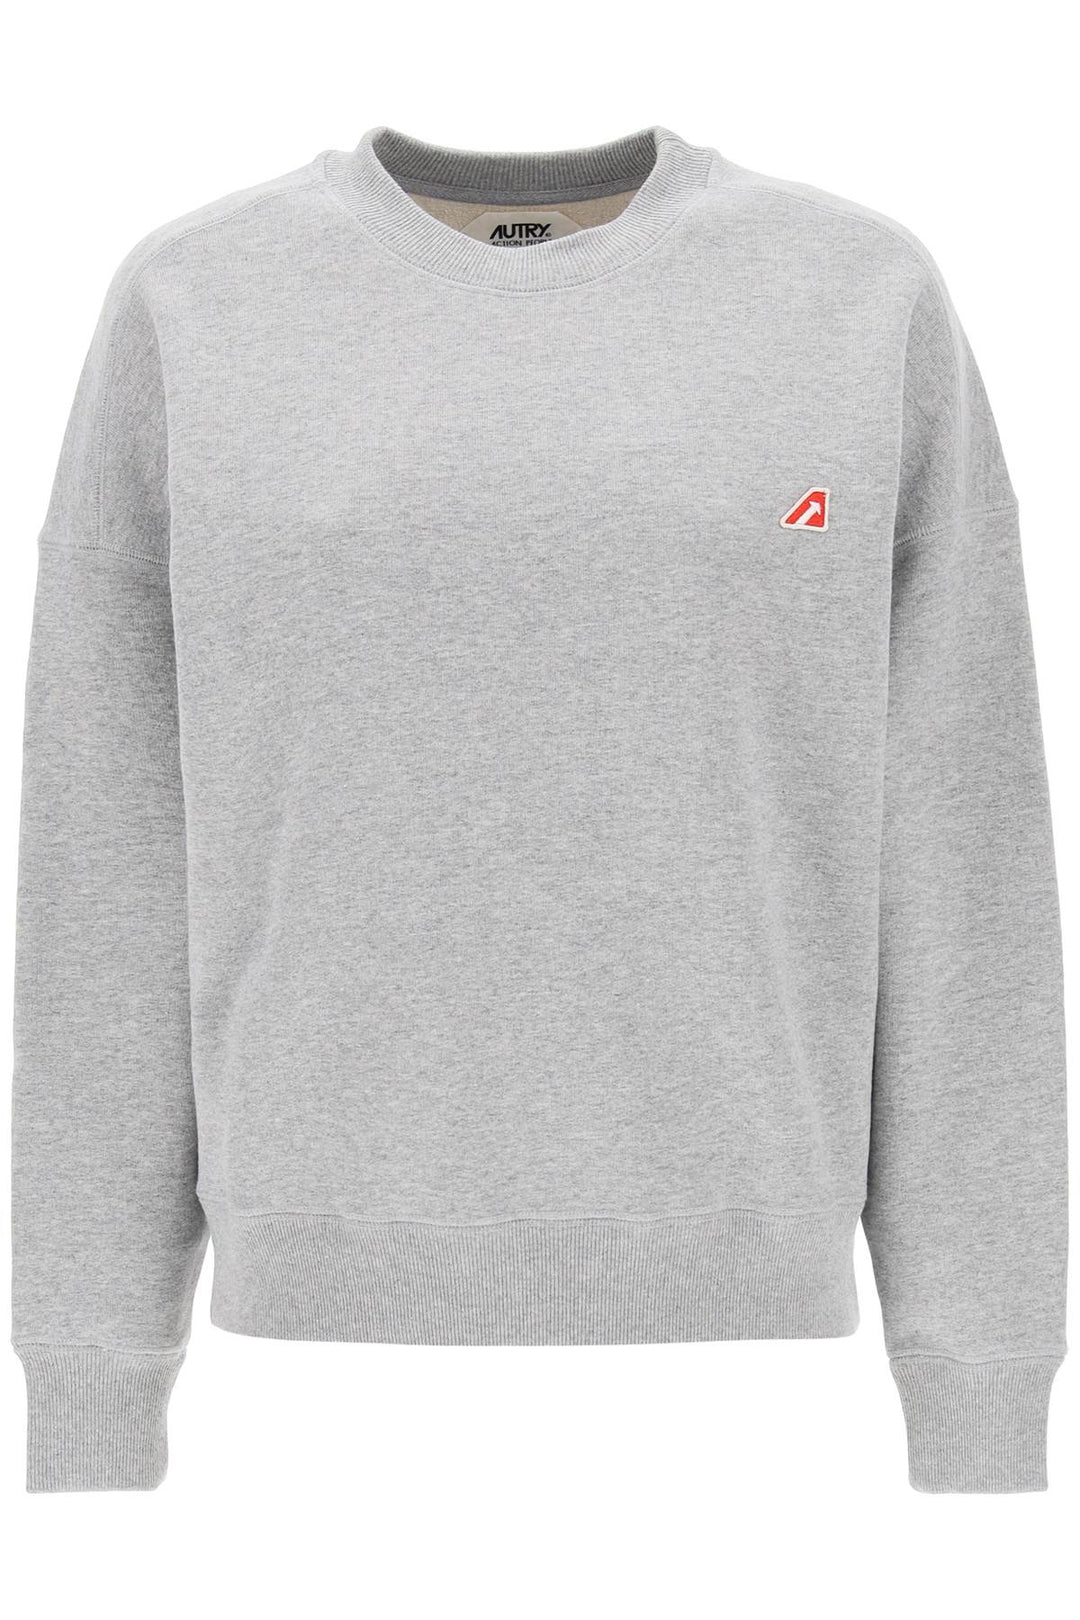 Autry Crew Neck Sweatshirt With Logo Patch   Grey